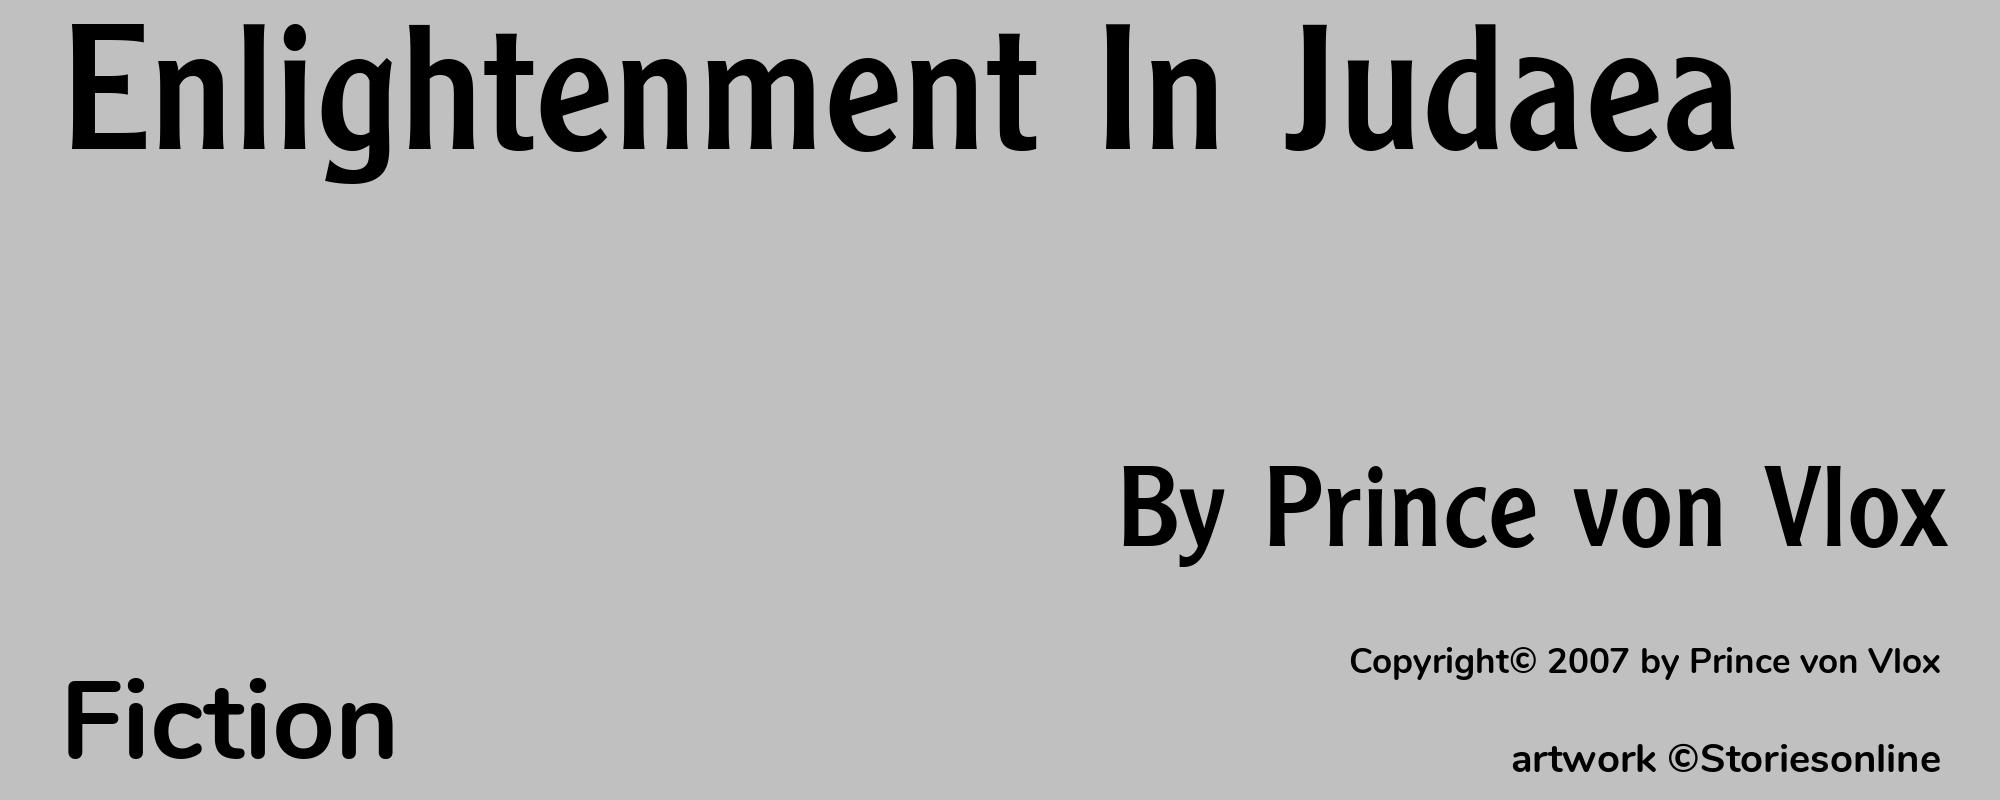 Enlightenment In Judaea - Cover